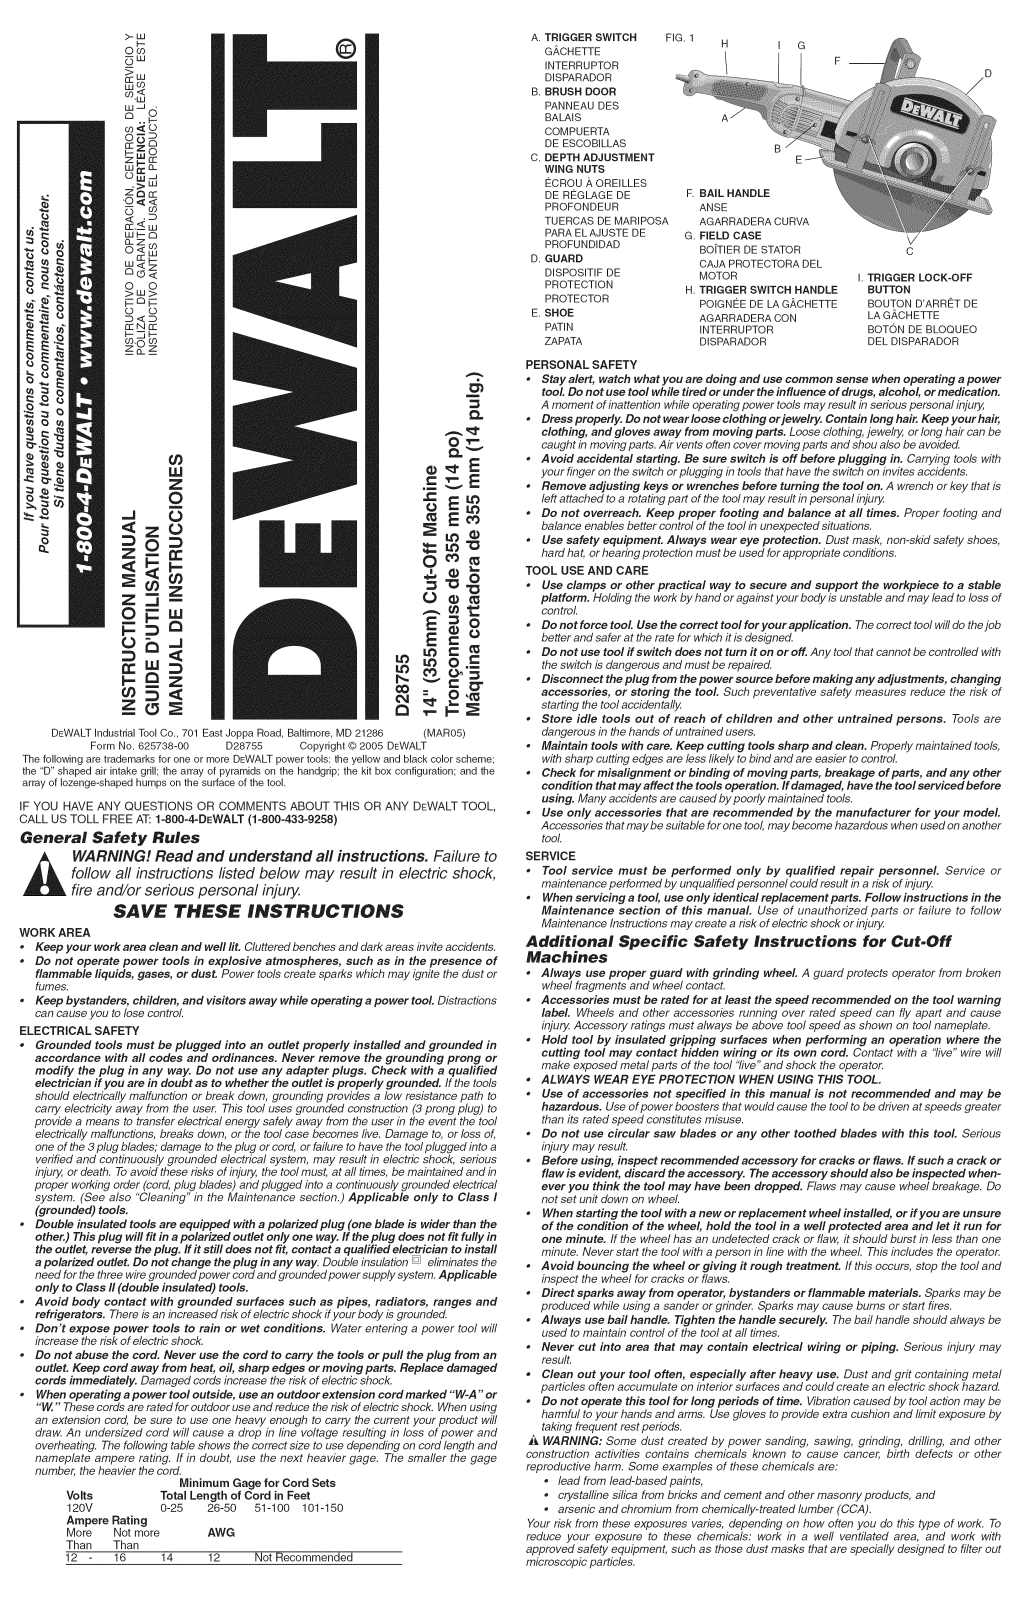 DeWalt D28755 TYPE 2, D28755 TYPE 1 Owner’s Manual